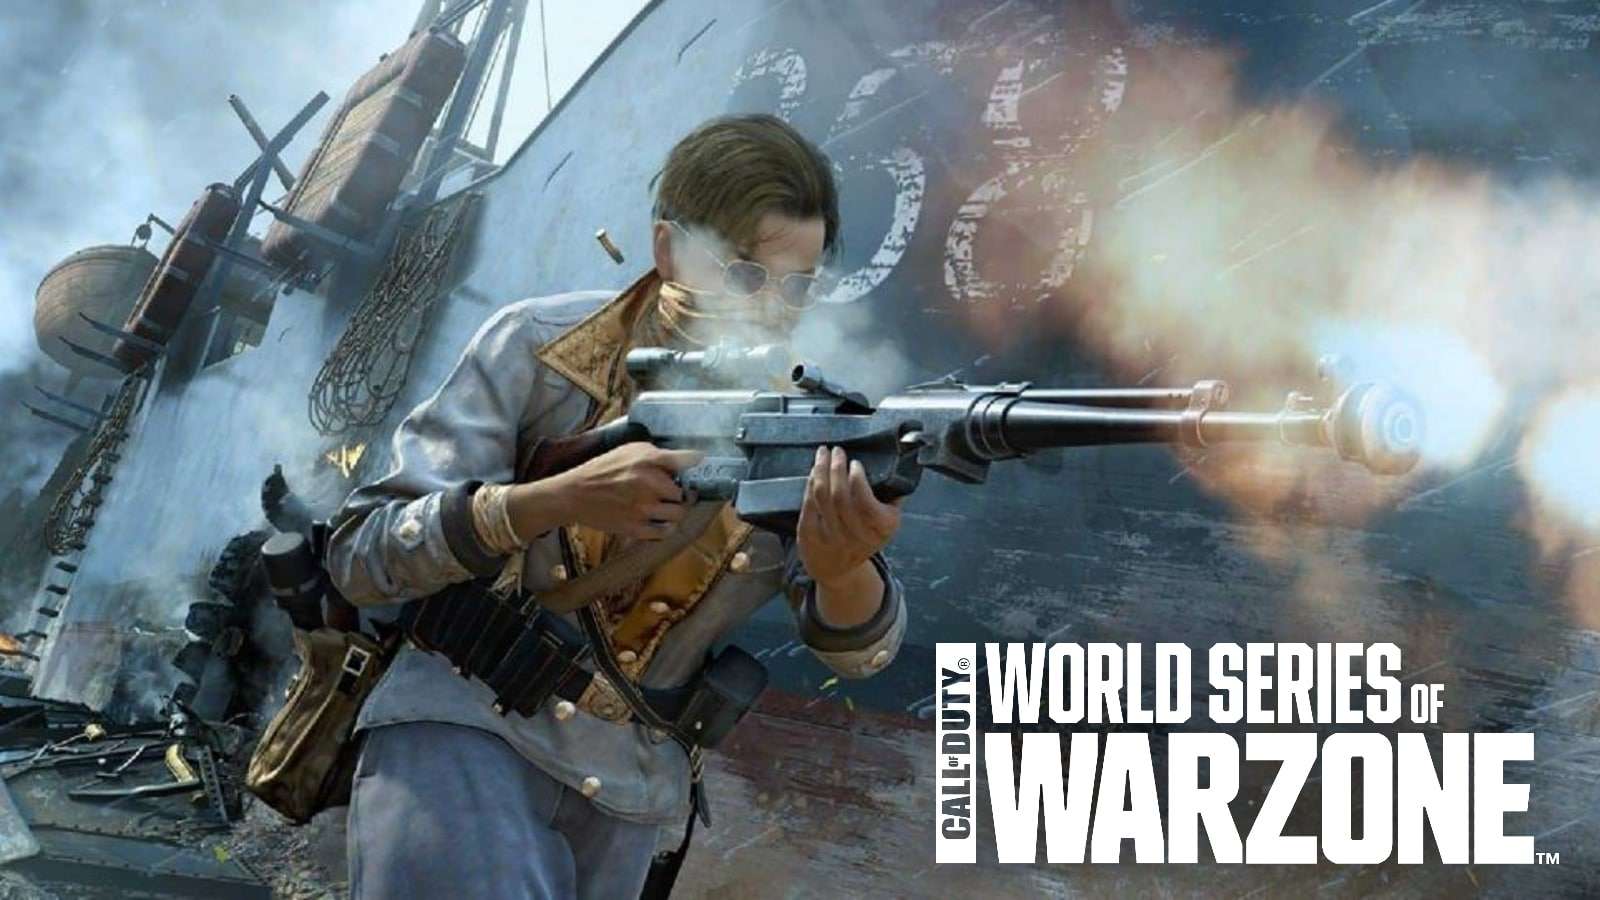 Warzone player using Gorenko sniper with World Series of Warzone logo in corner